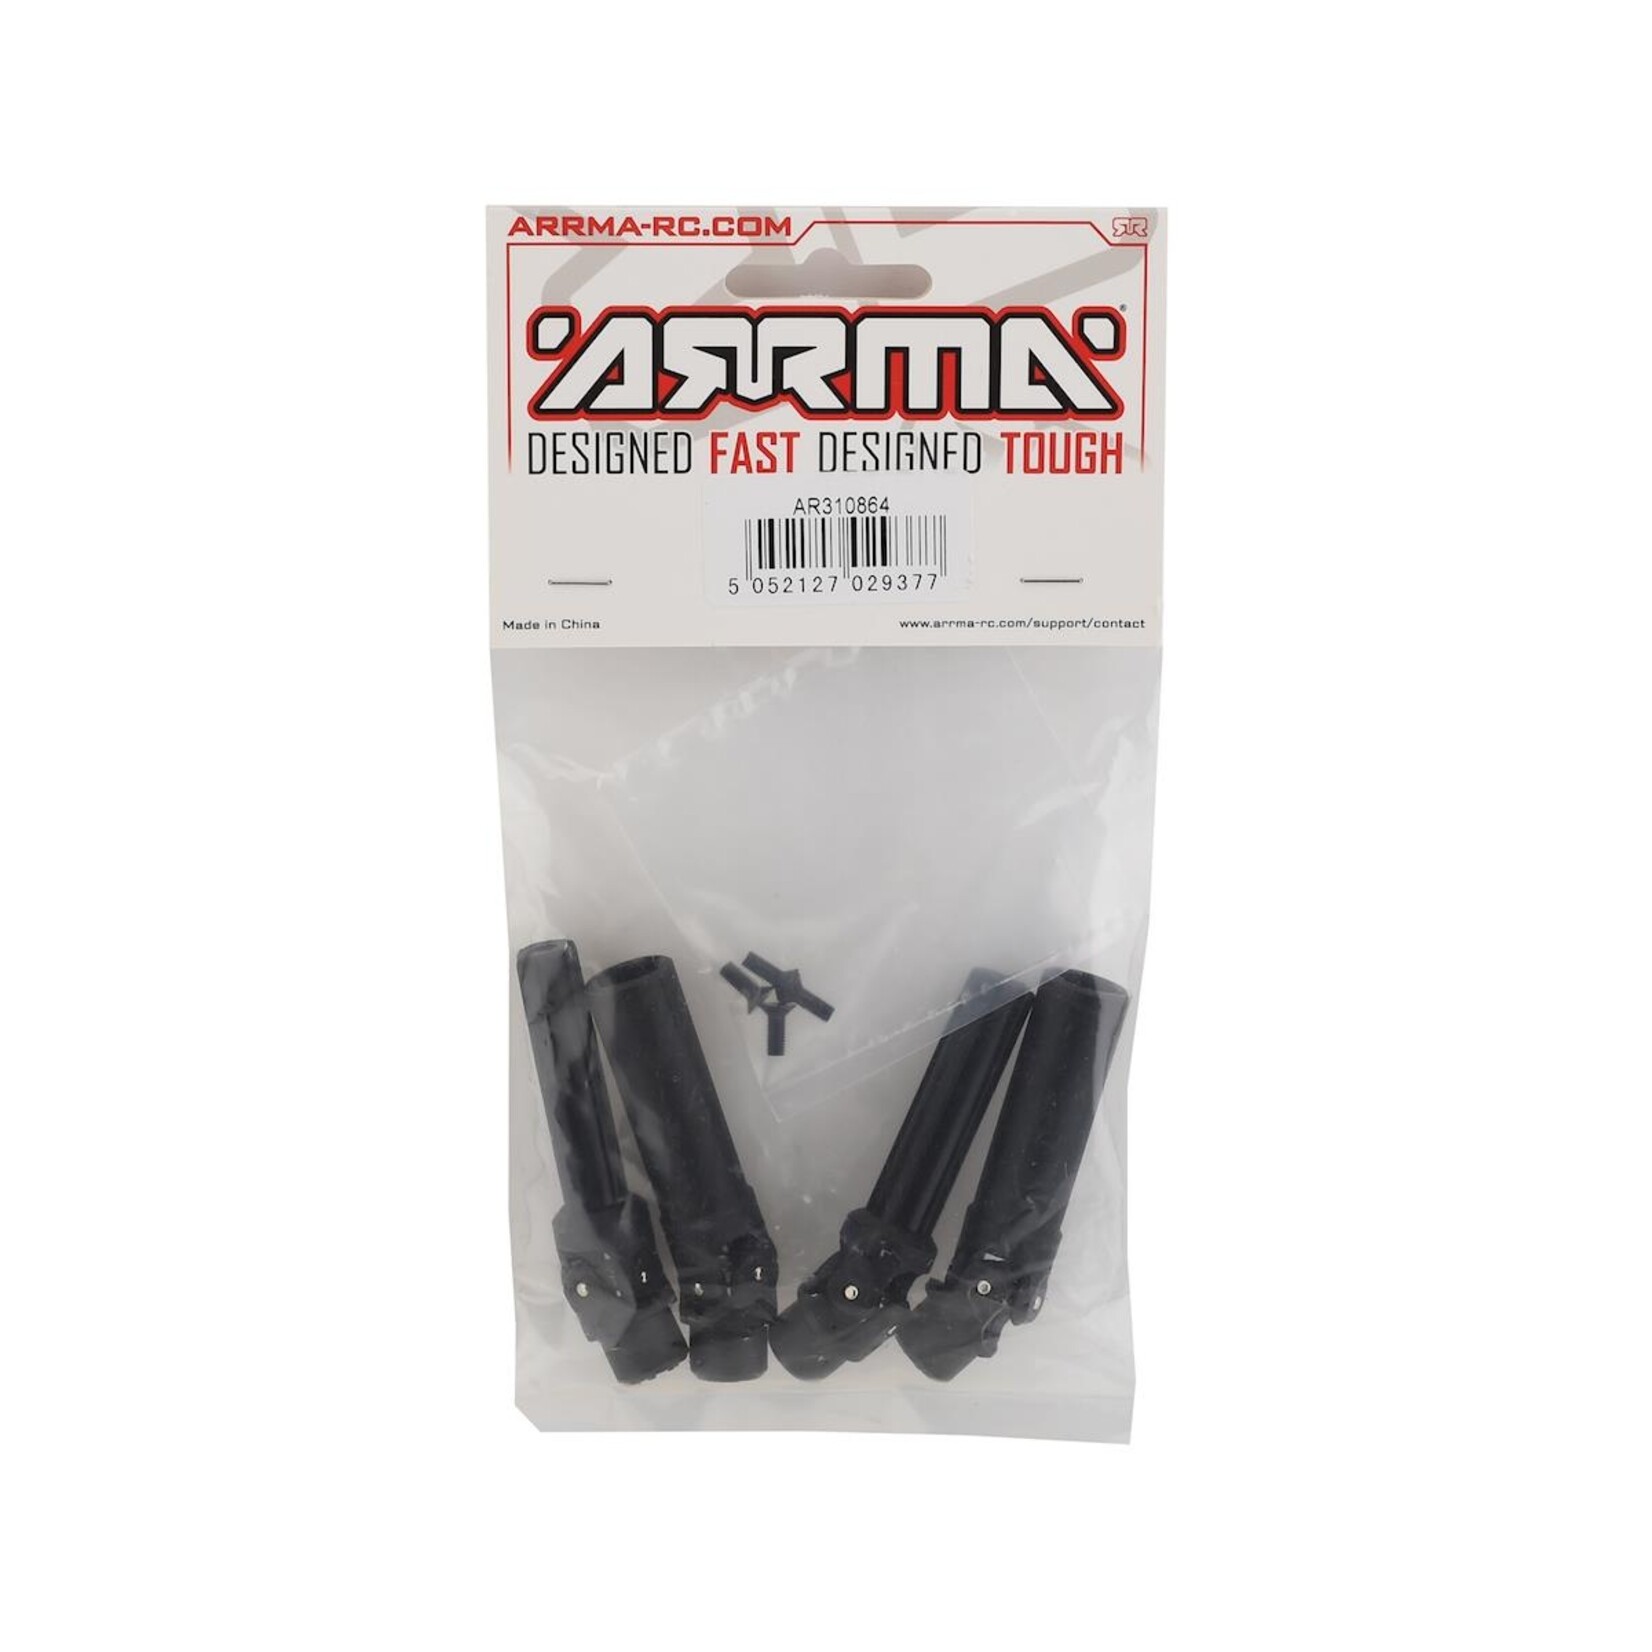 ARRMA Arrma 4x4 Composite Rear Slider Driveshaft Set #AR310864